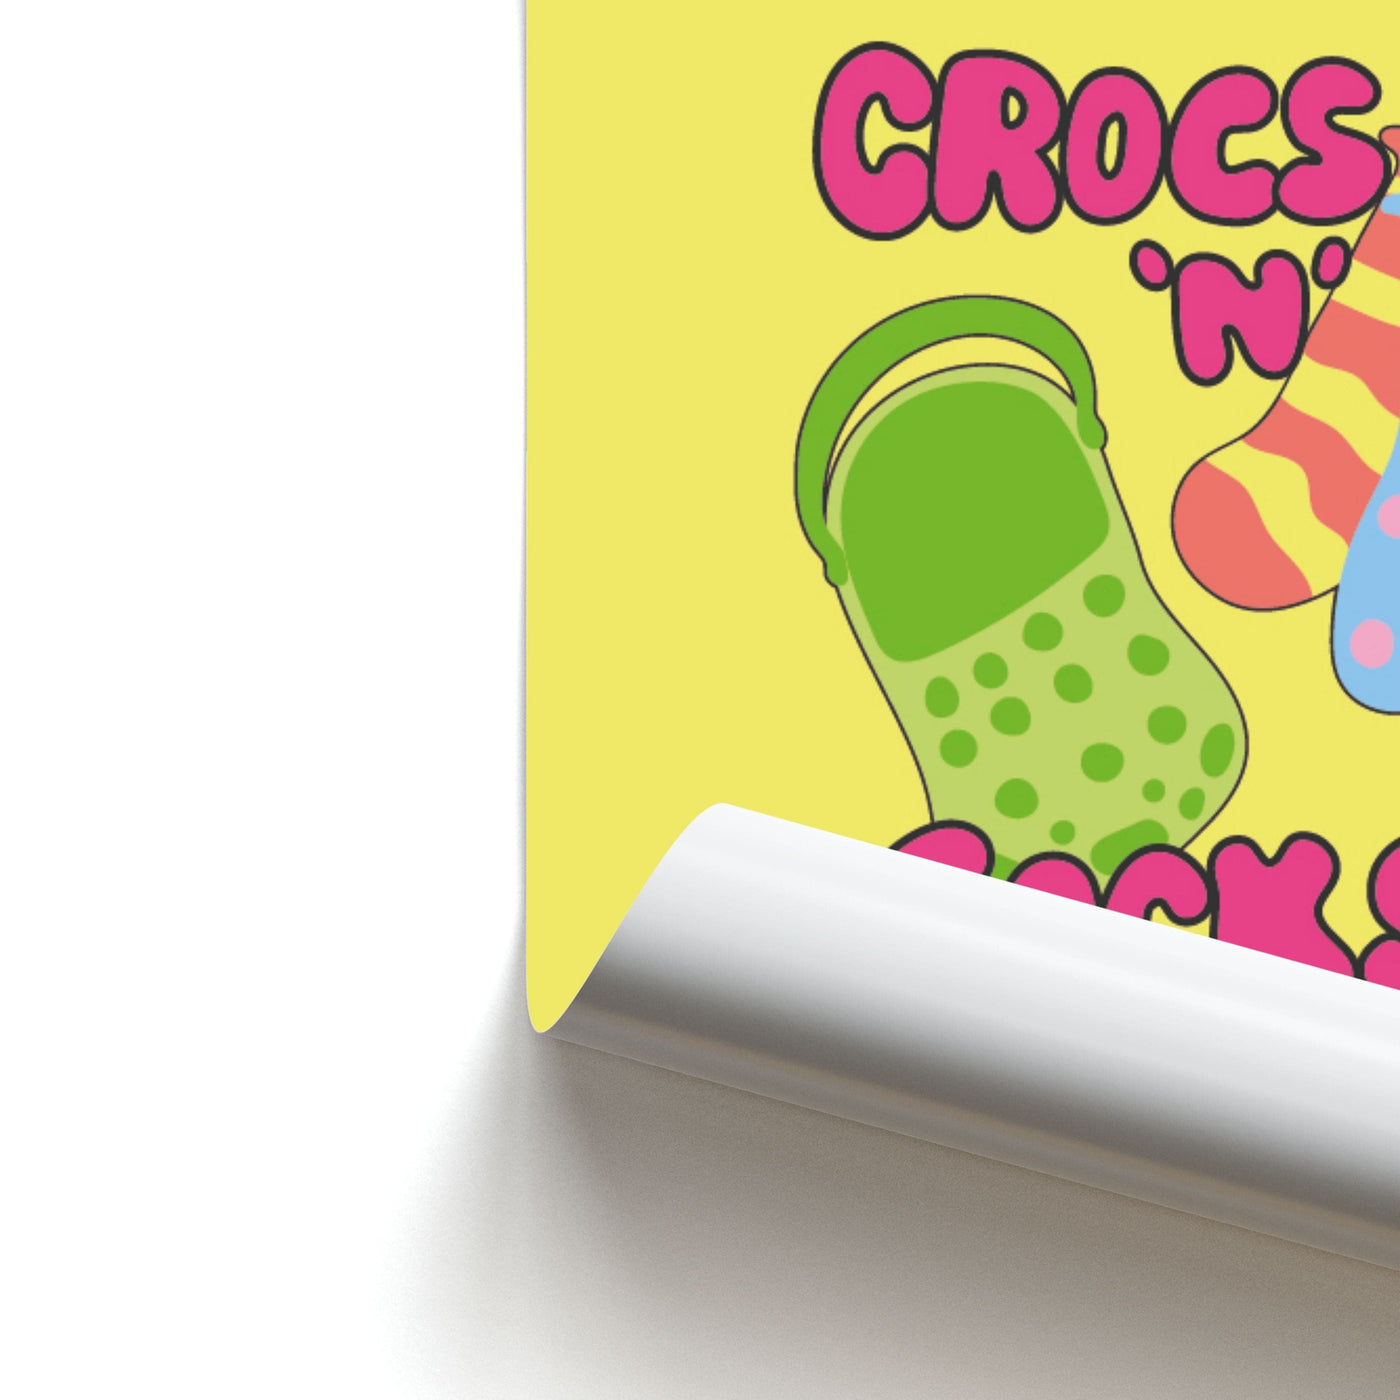 Crocs And Socks - Crocs Poster